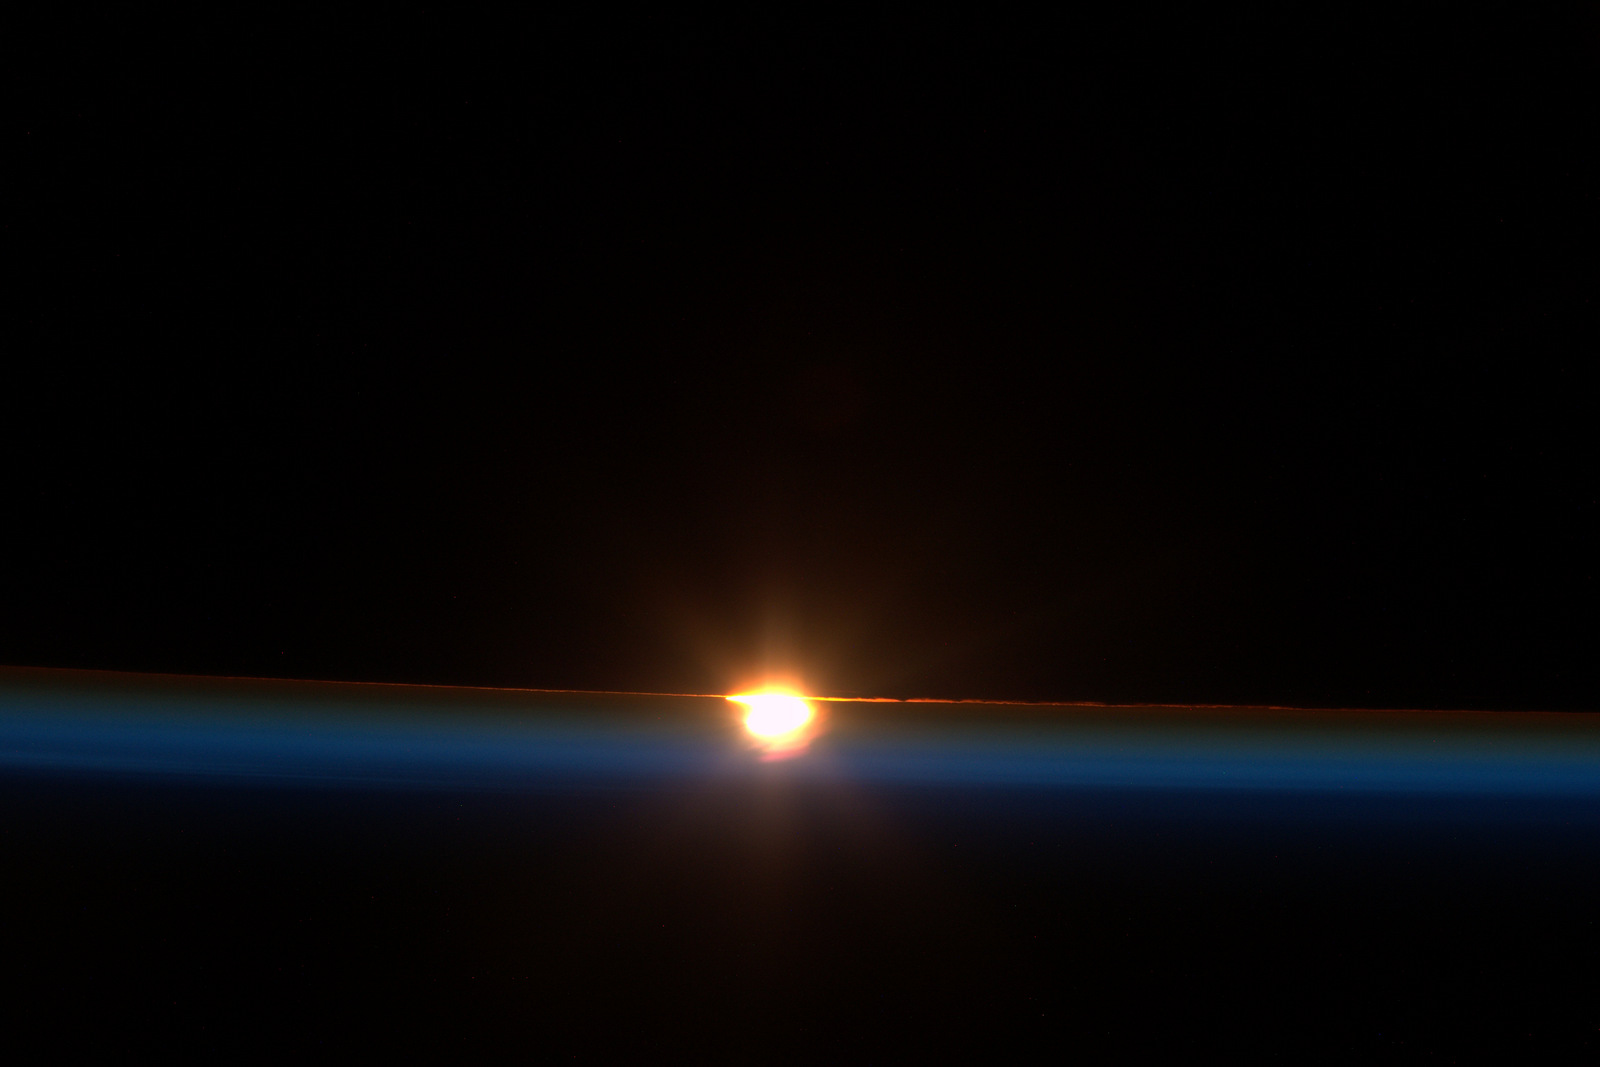 20 March solar eclipse at sunrise